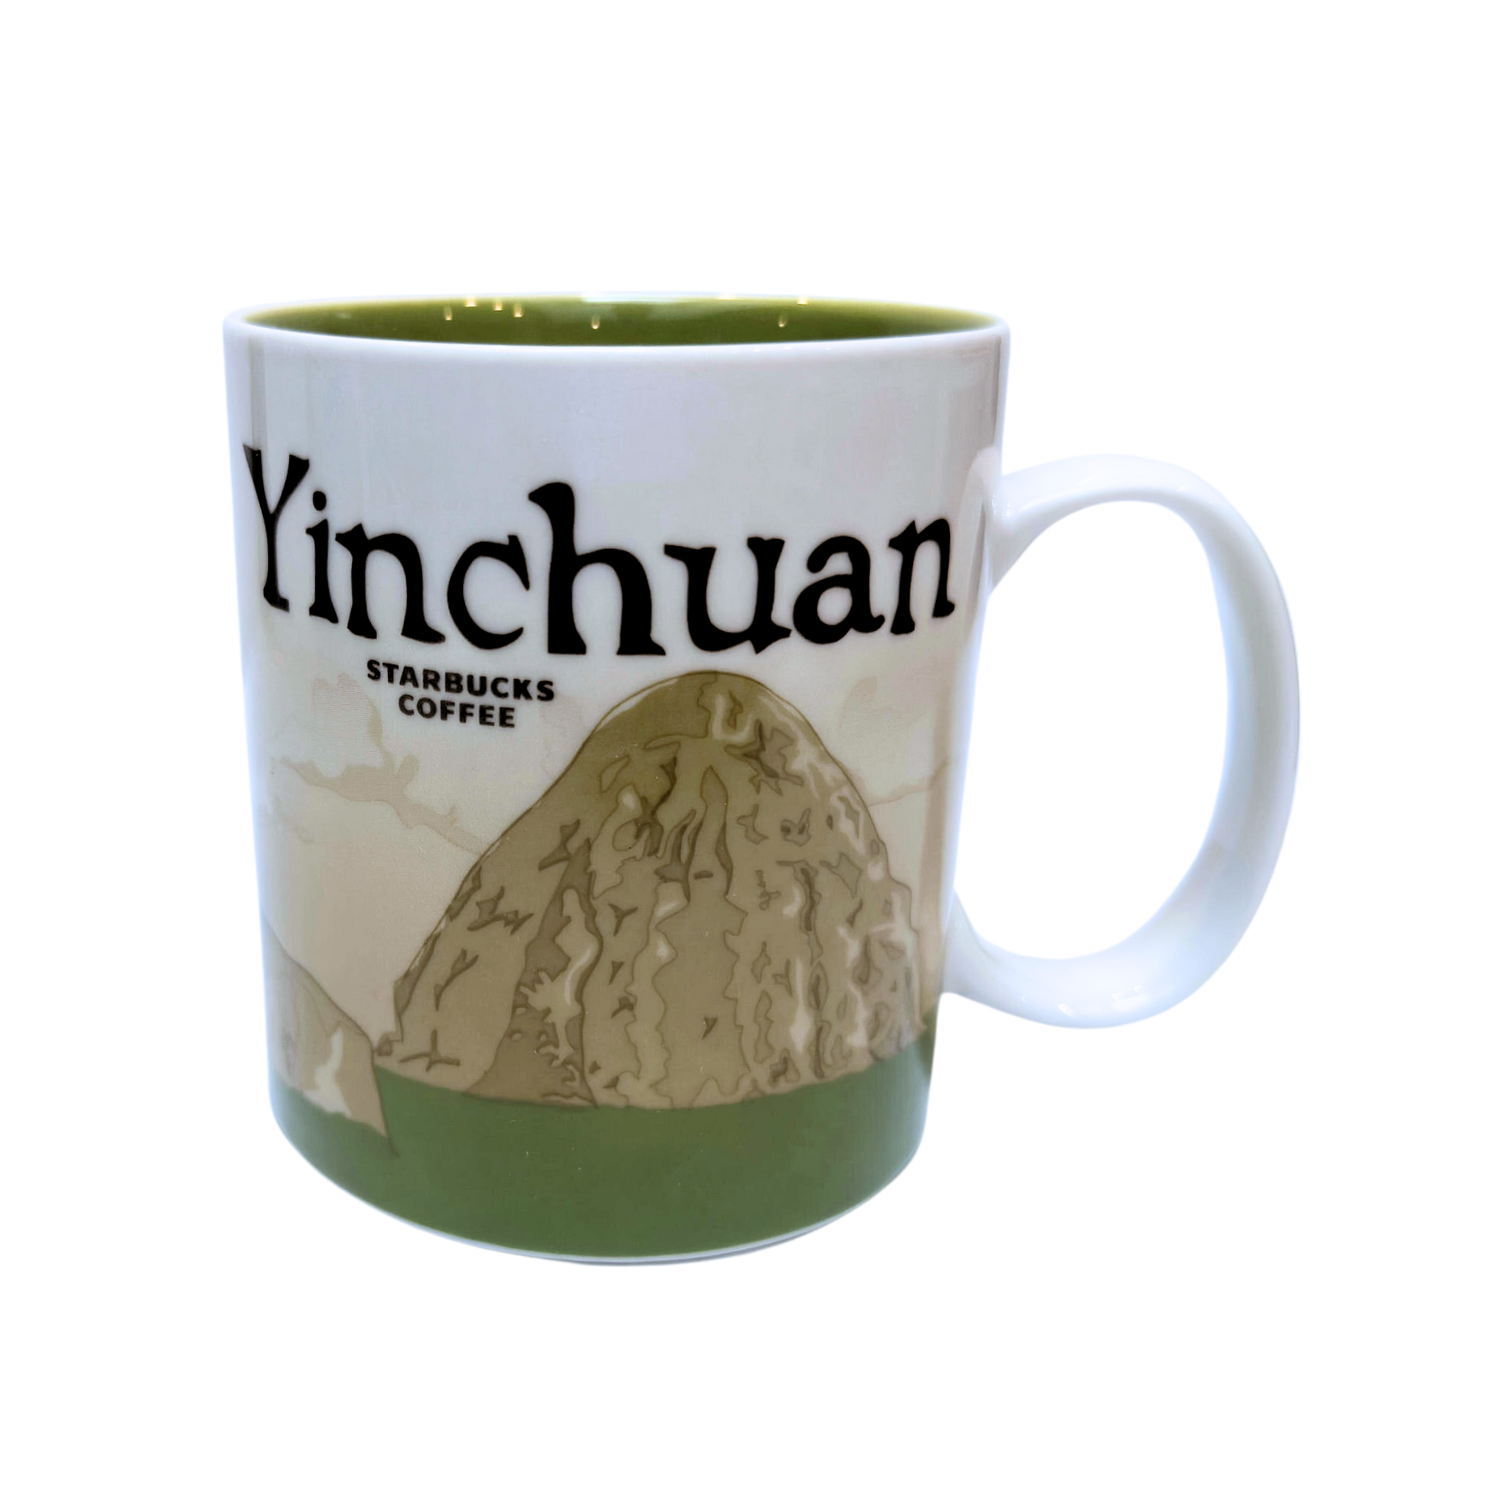 Starbucks Global Icon Series Yinchuan Ceramic Mug, 16 Oz